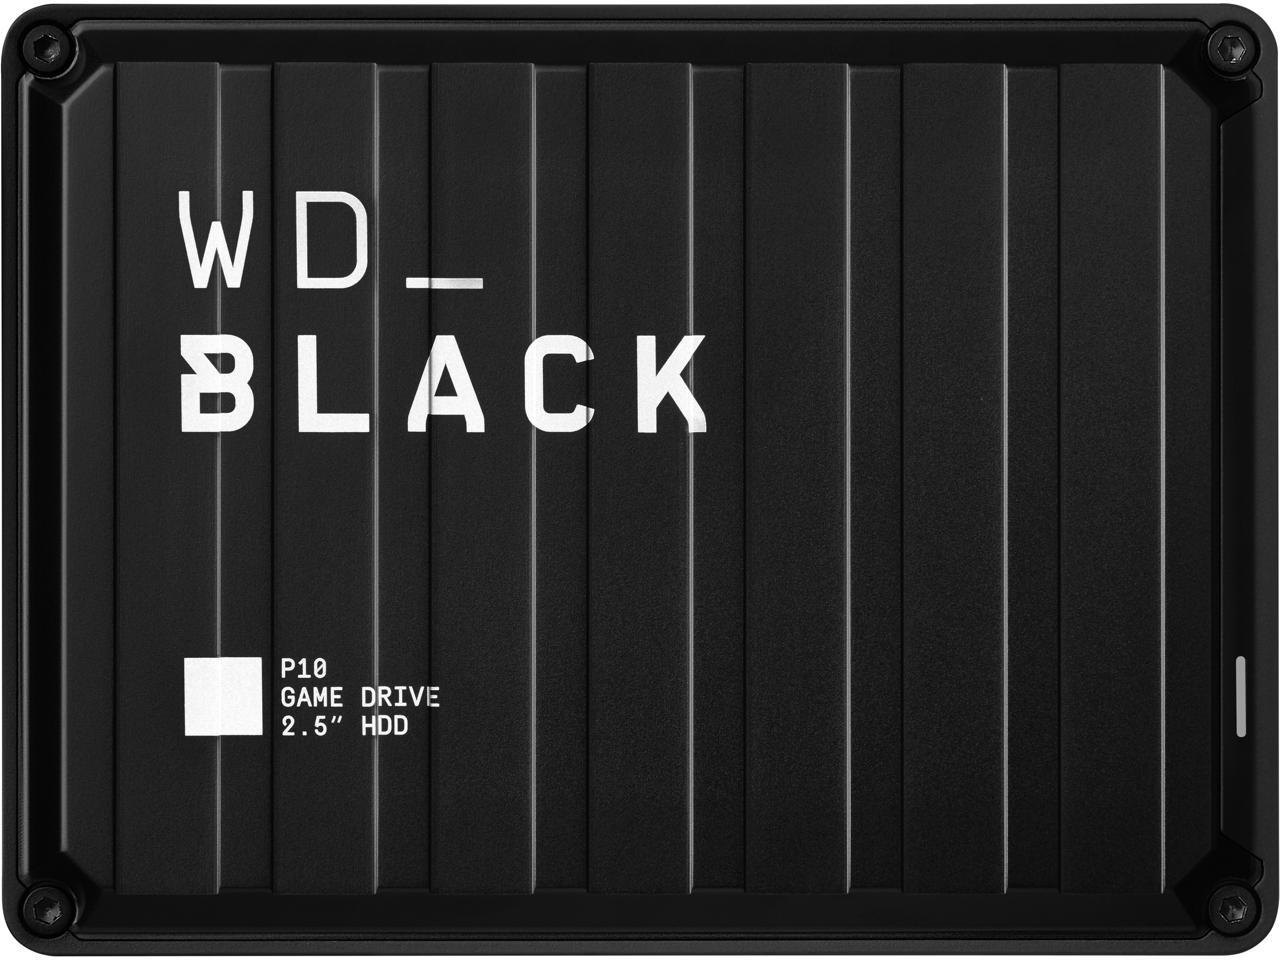 5TB WD Black P10 Game Drive Portable External Hard Drive (11/25) @Newegg $100